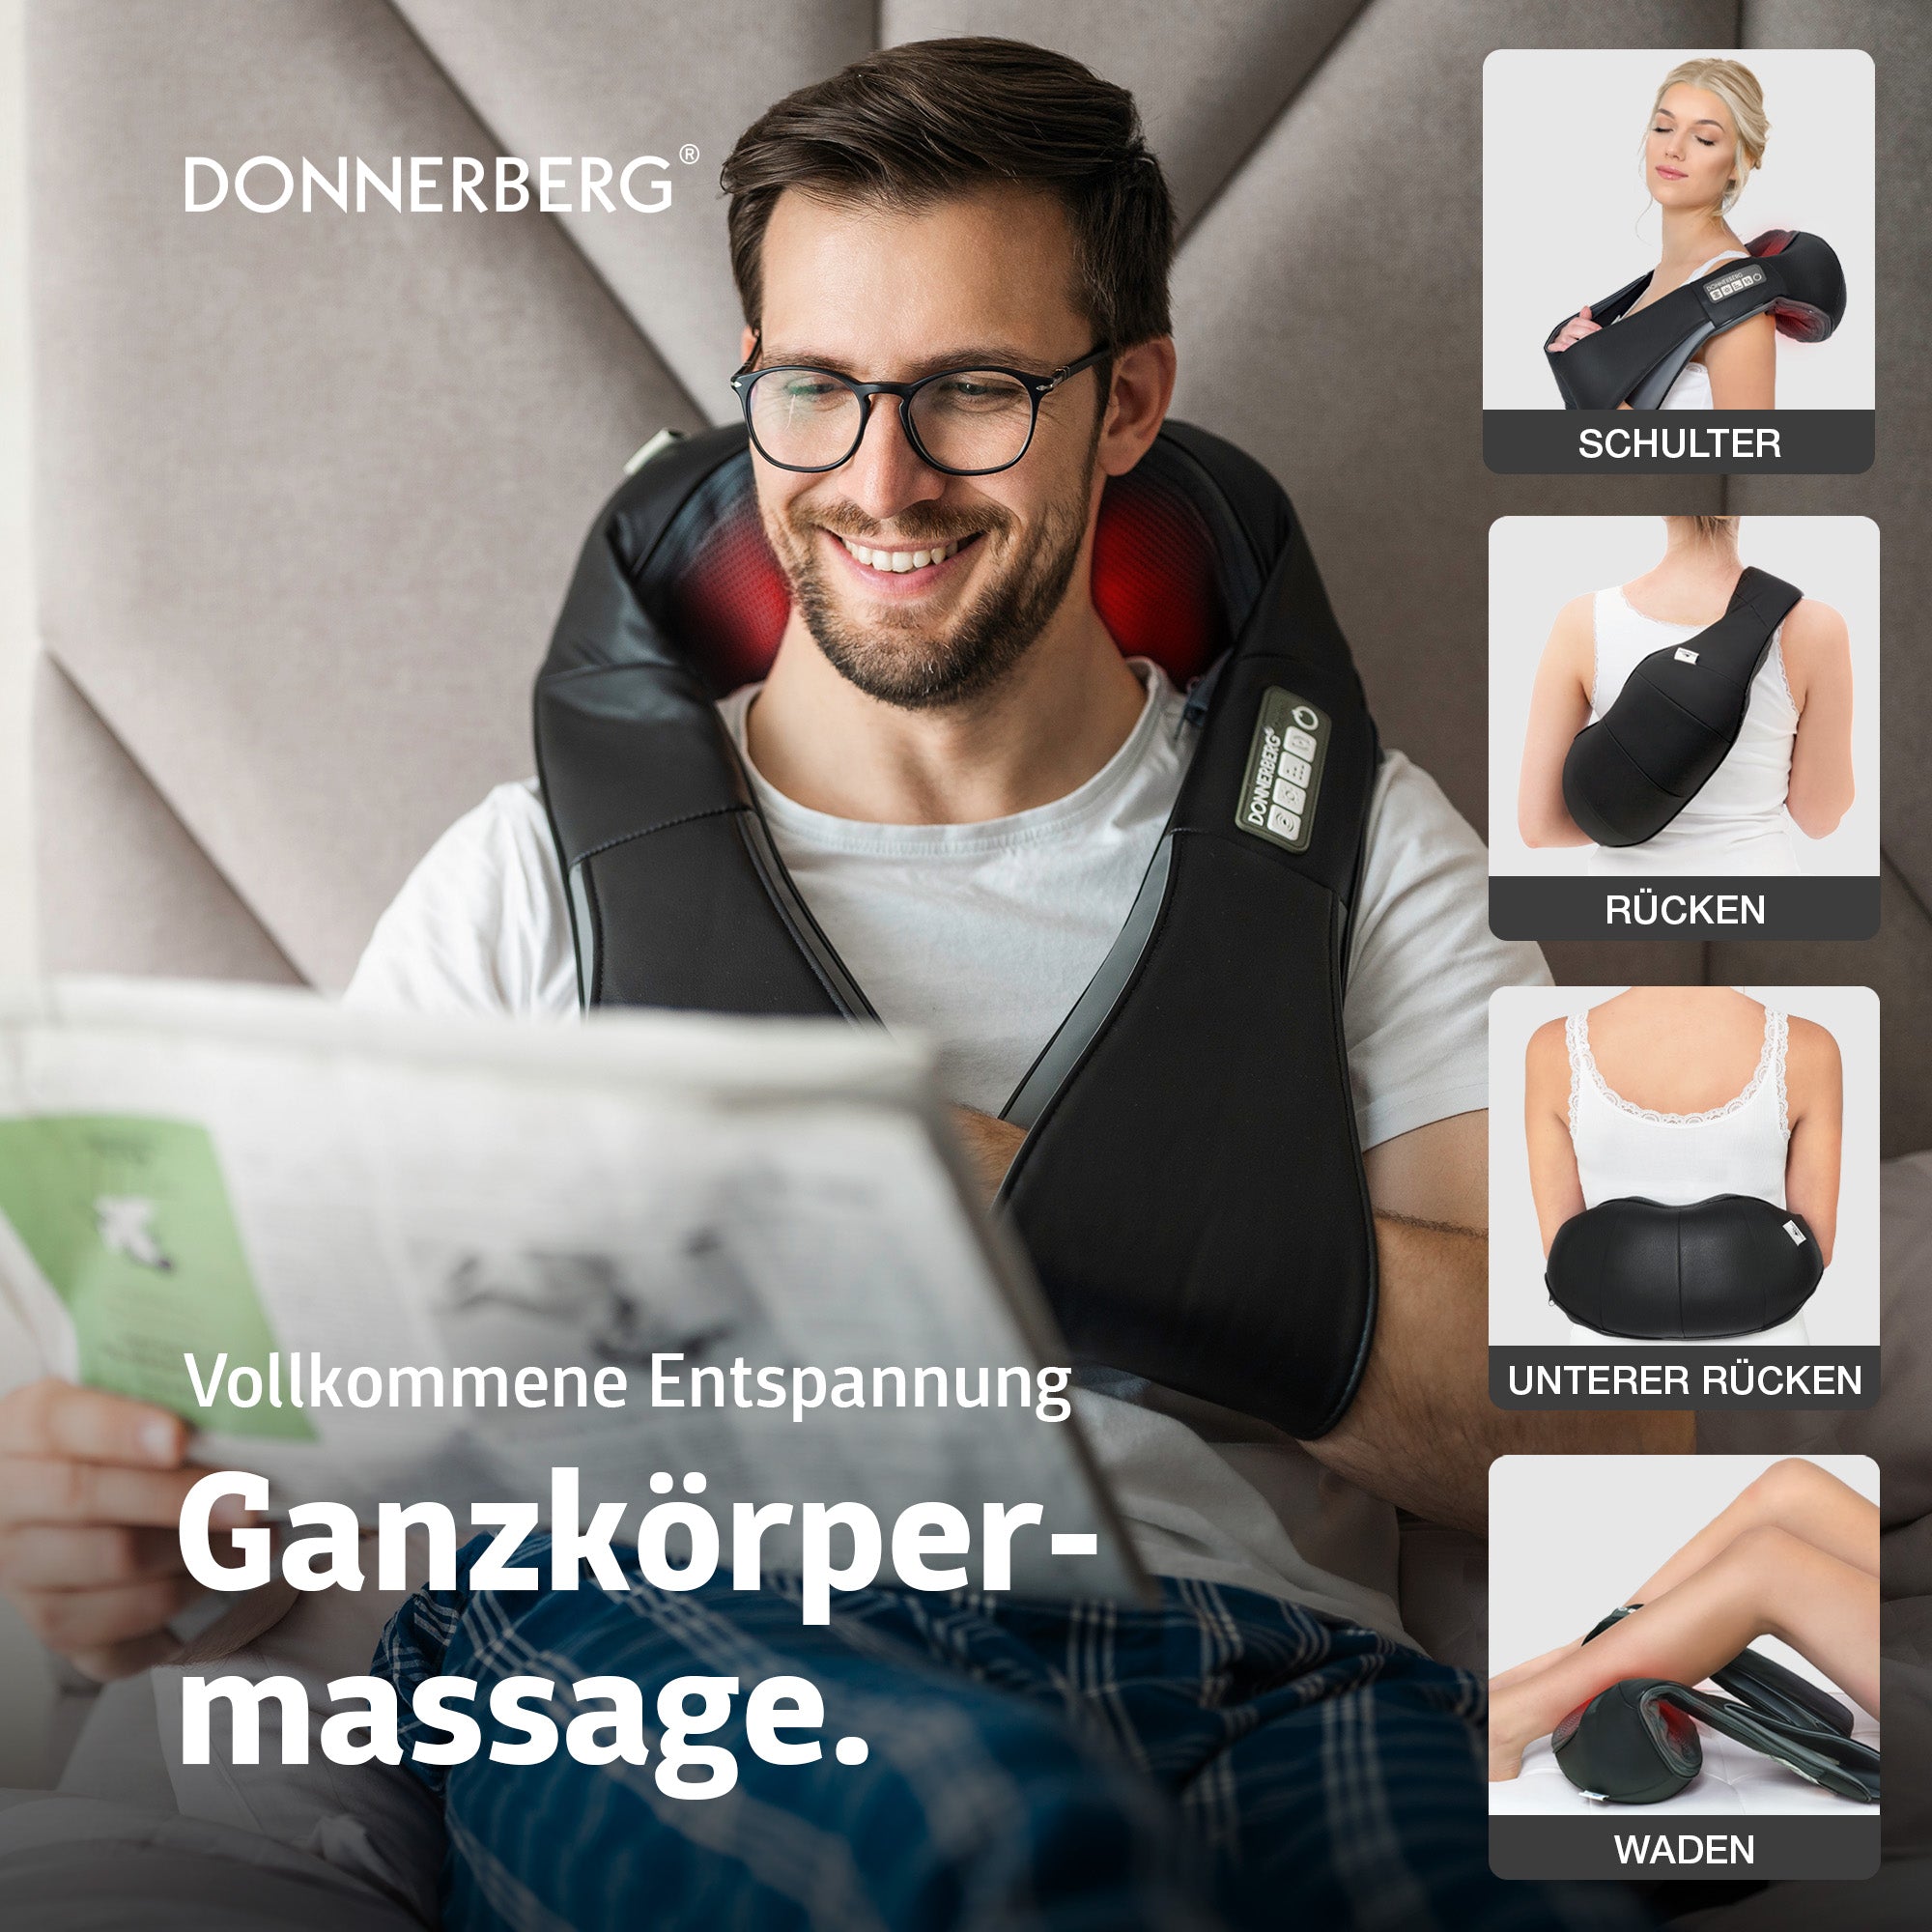 Massager for full body massage applied on neck, shoulders, back, legs